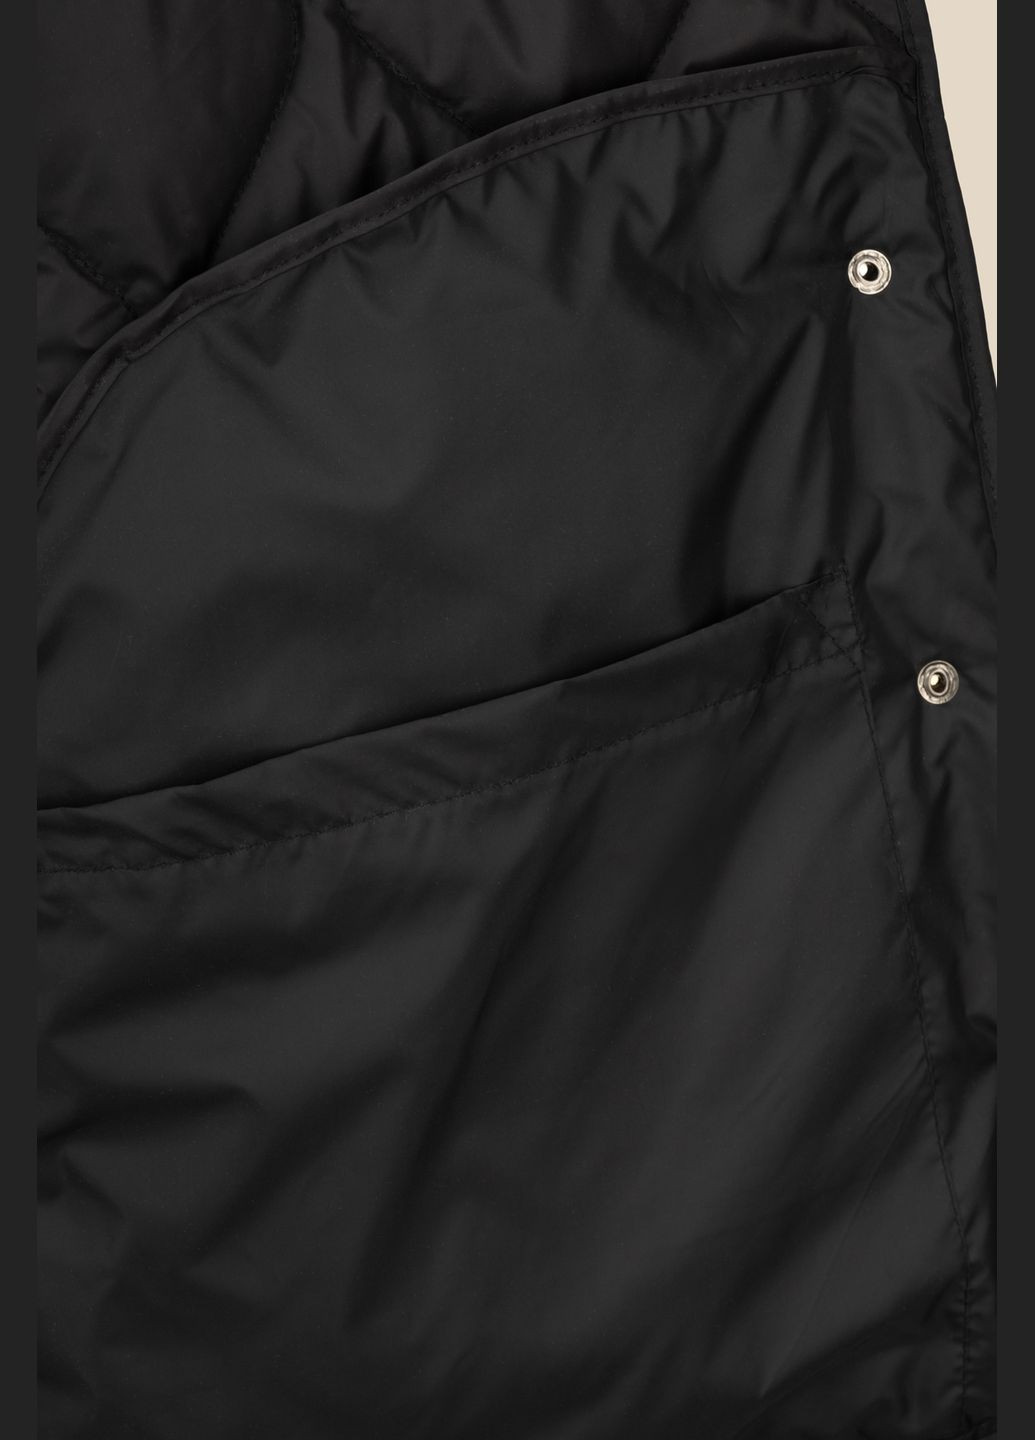 Черная демисезонная куртка LAWA